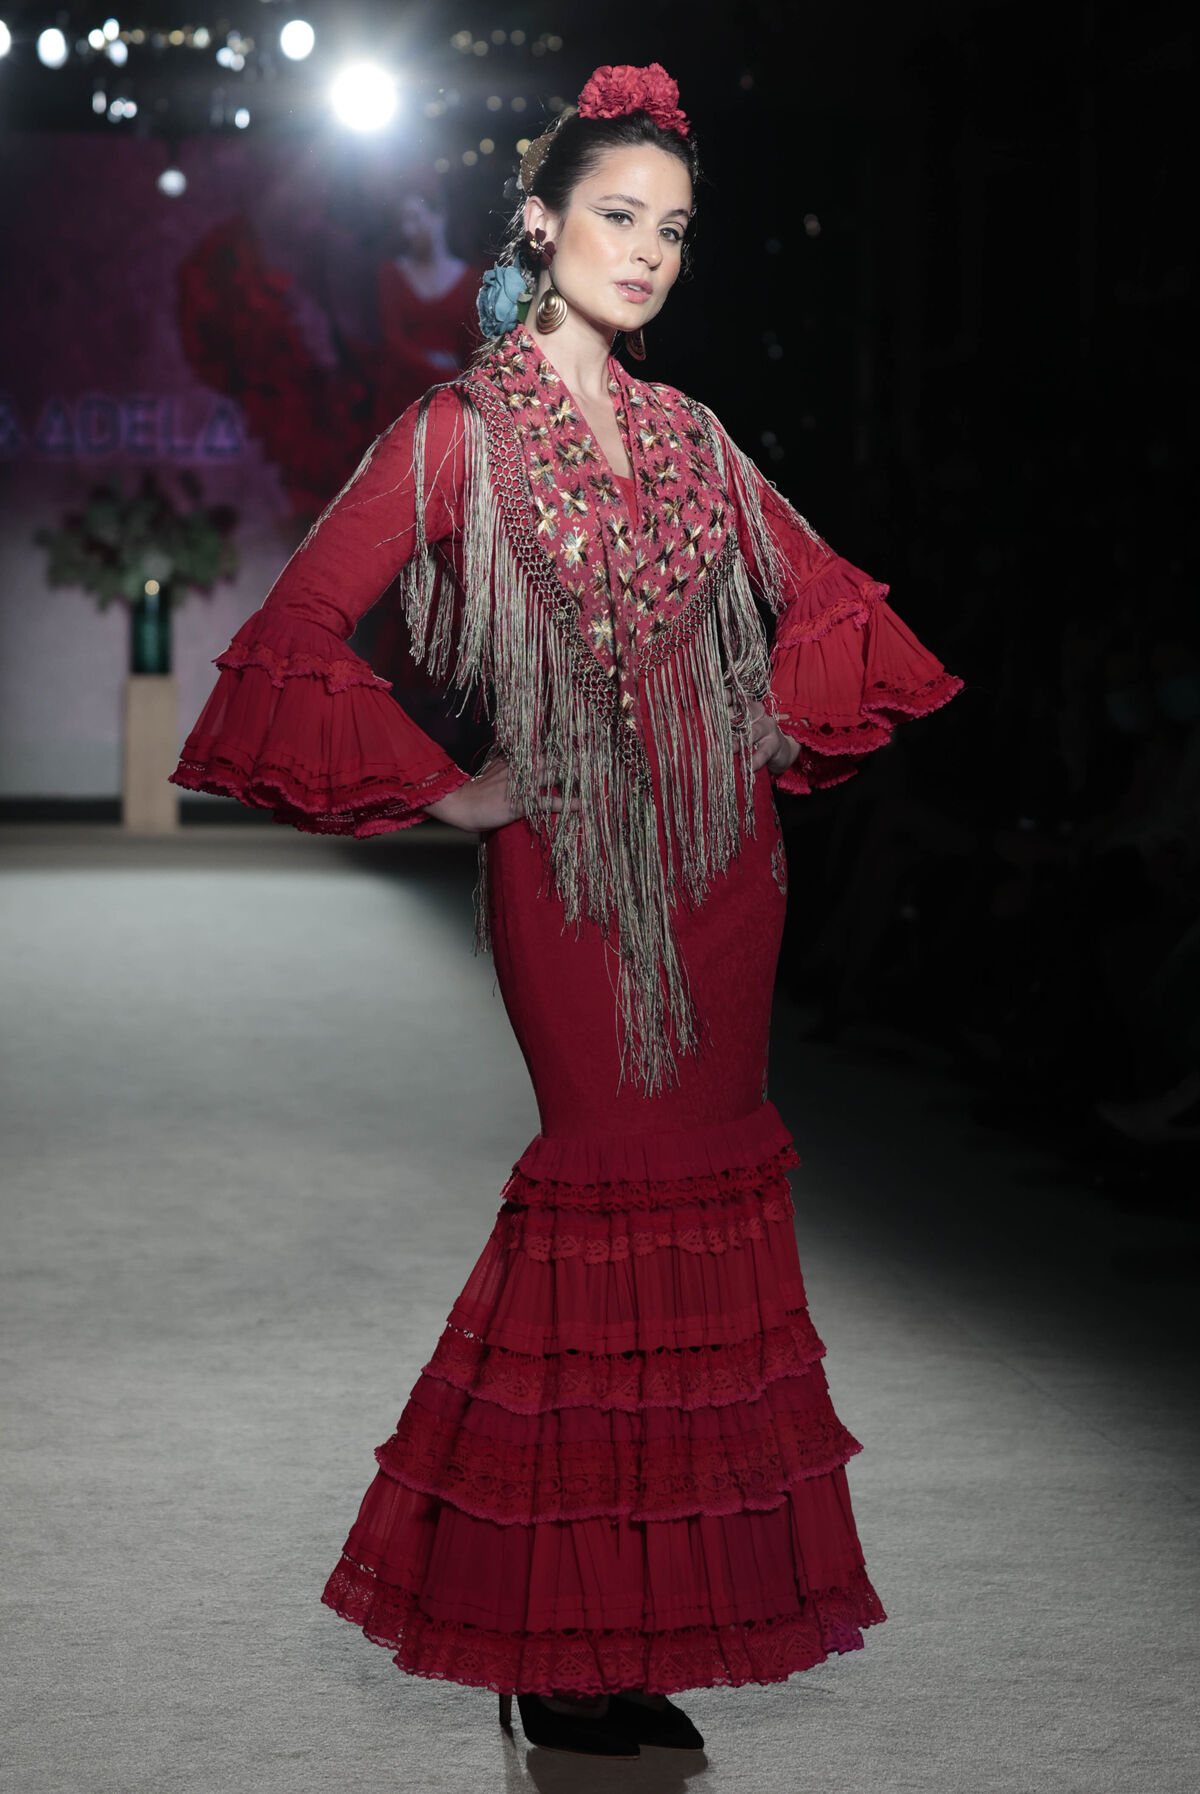 de 2022: combinar tu traje de flamenca rojo